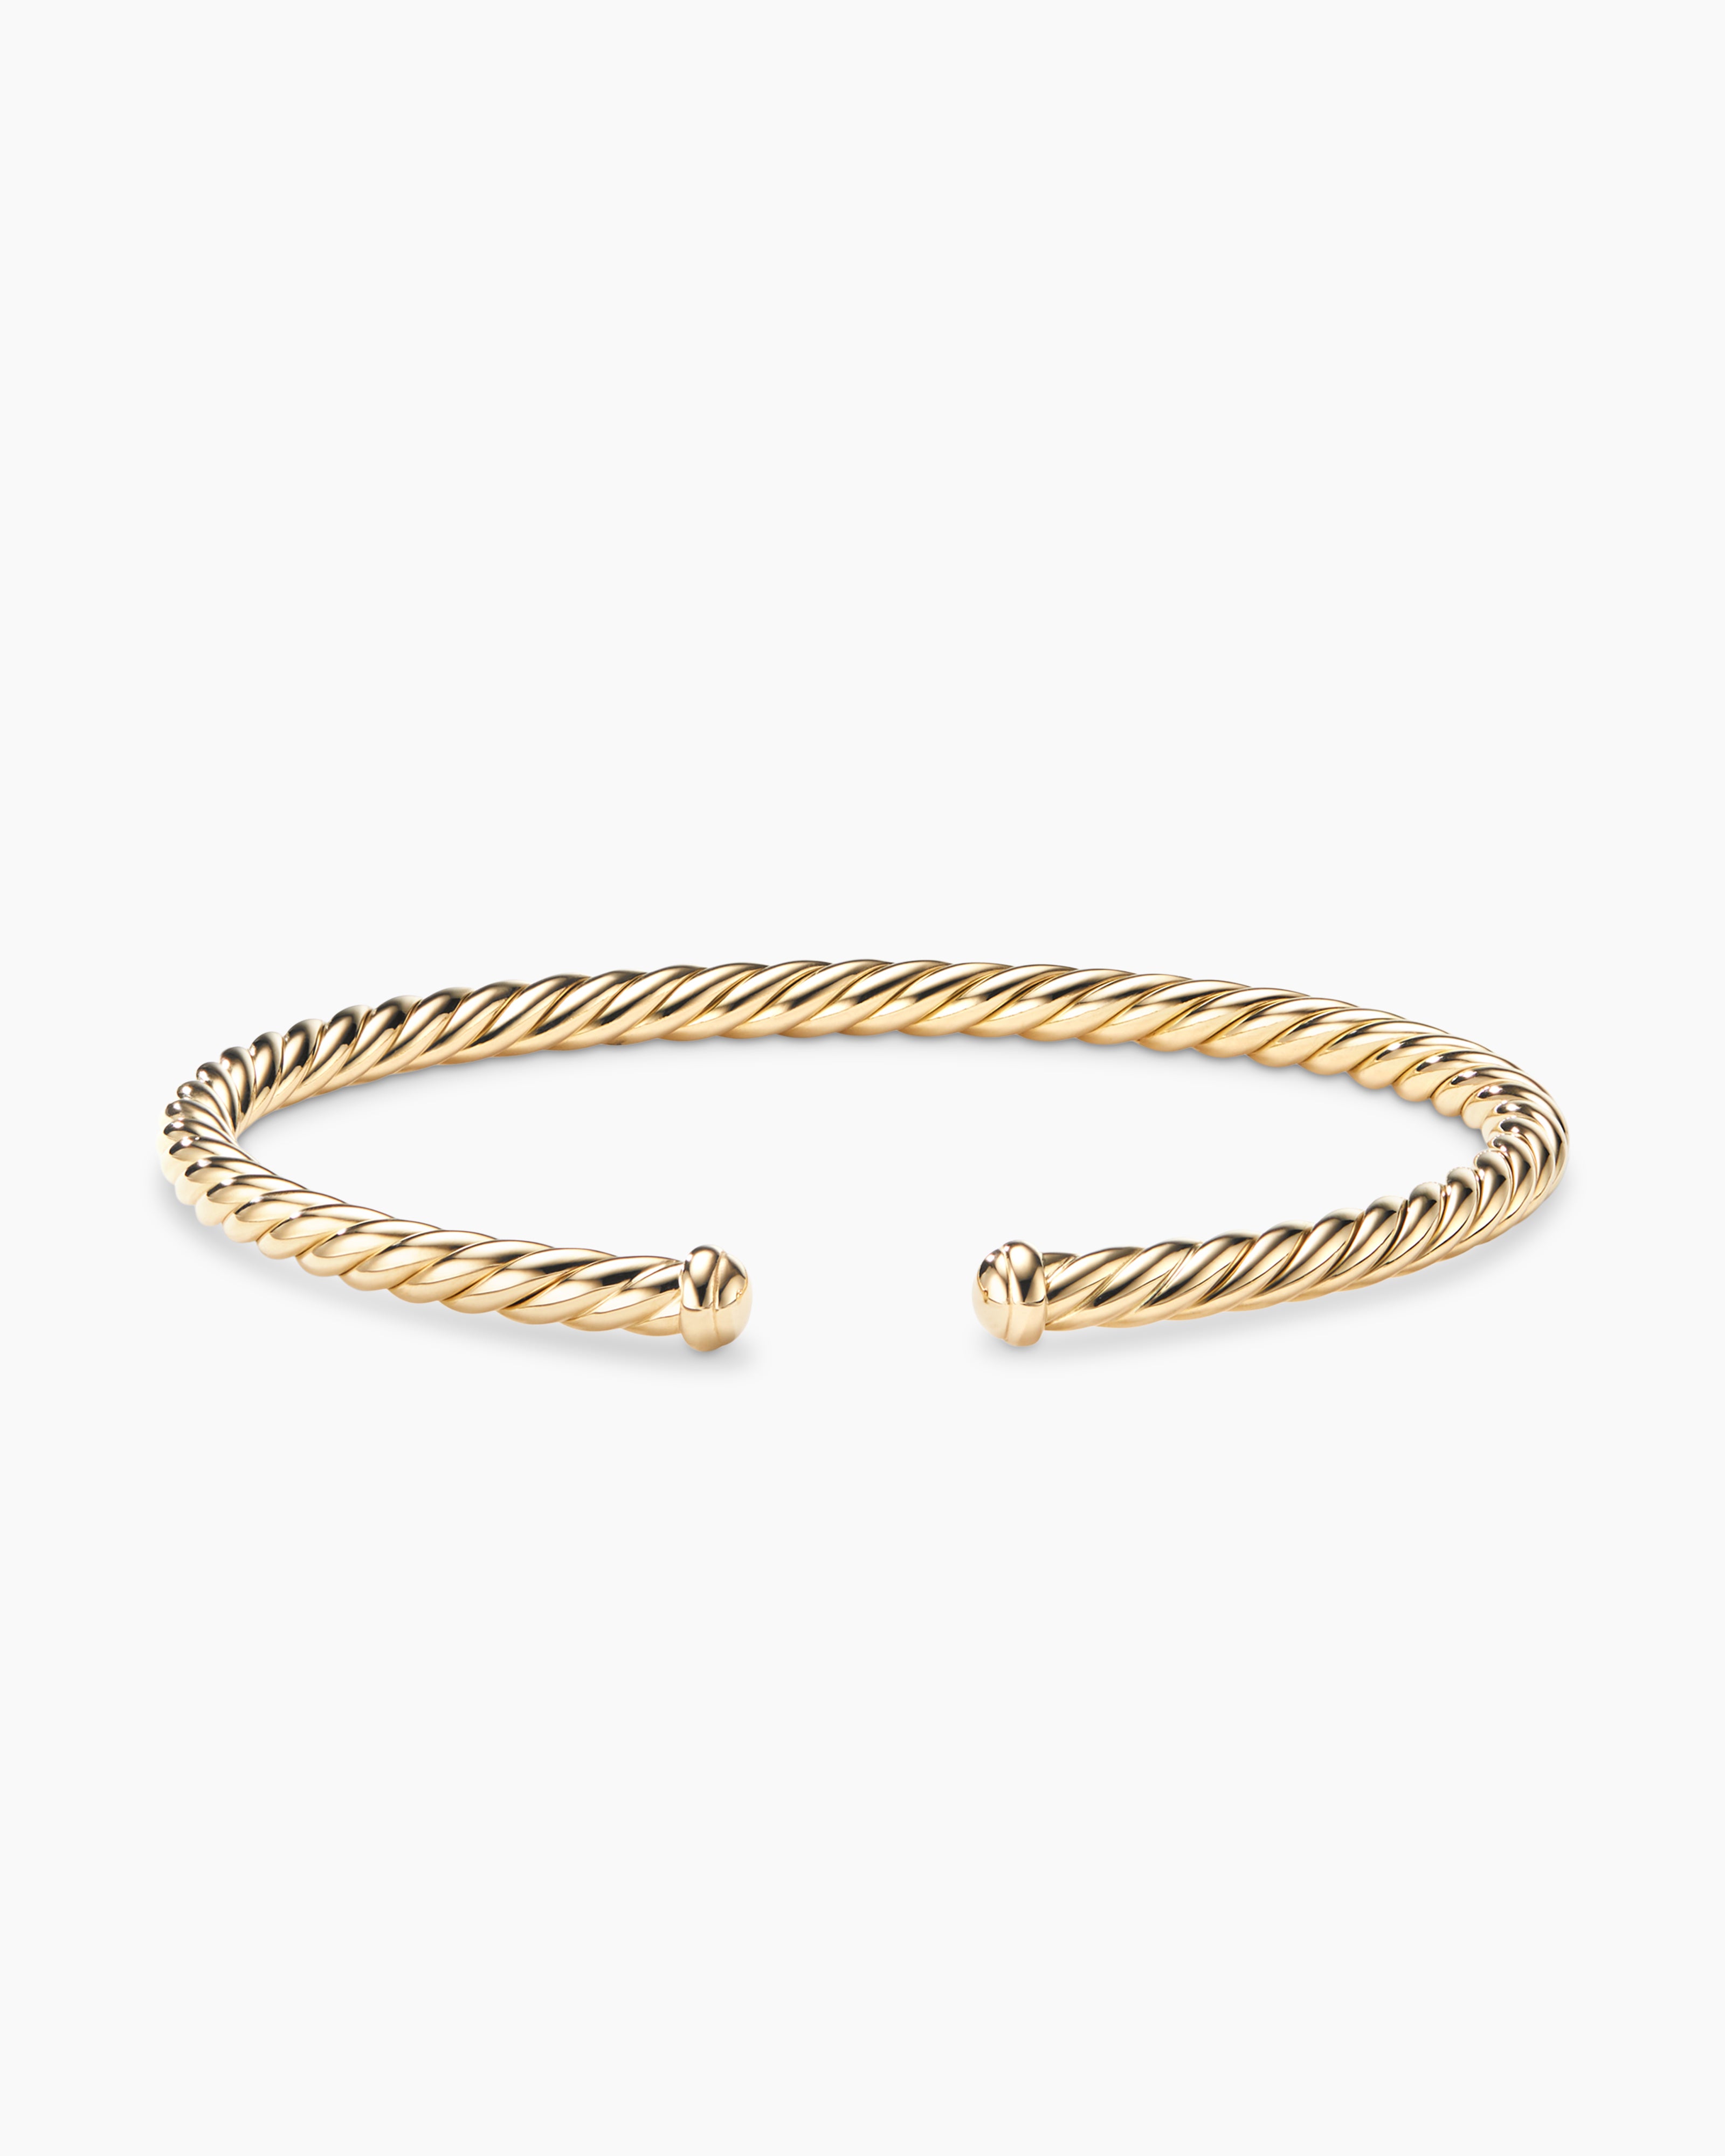 Modern Chain Bracelet Gold or Silver Rectangular Link Basic Gold Chain  Modern Simple Stacking 14k Gold Filled or Sterling Silver - Etsy